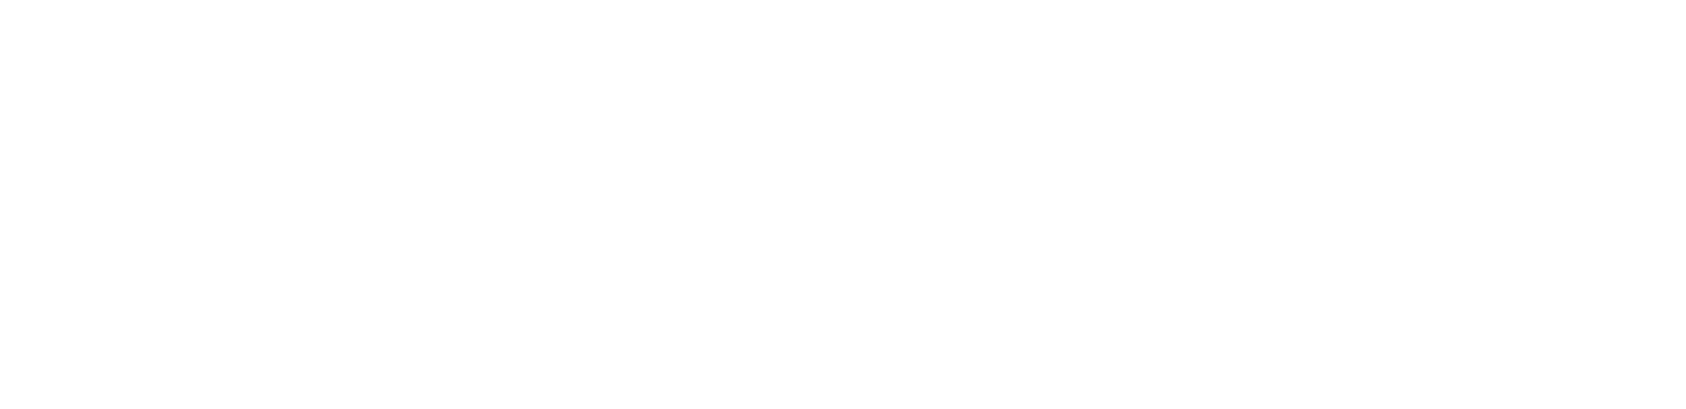 Pay Pal Logo Gray Background